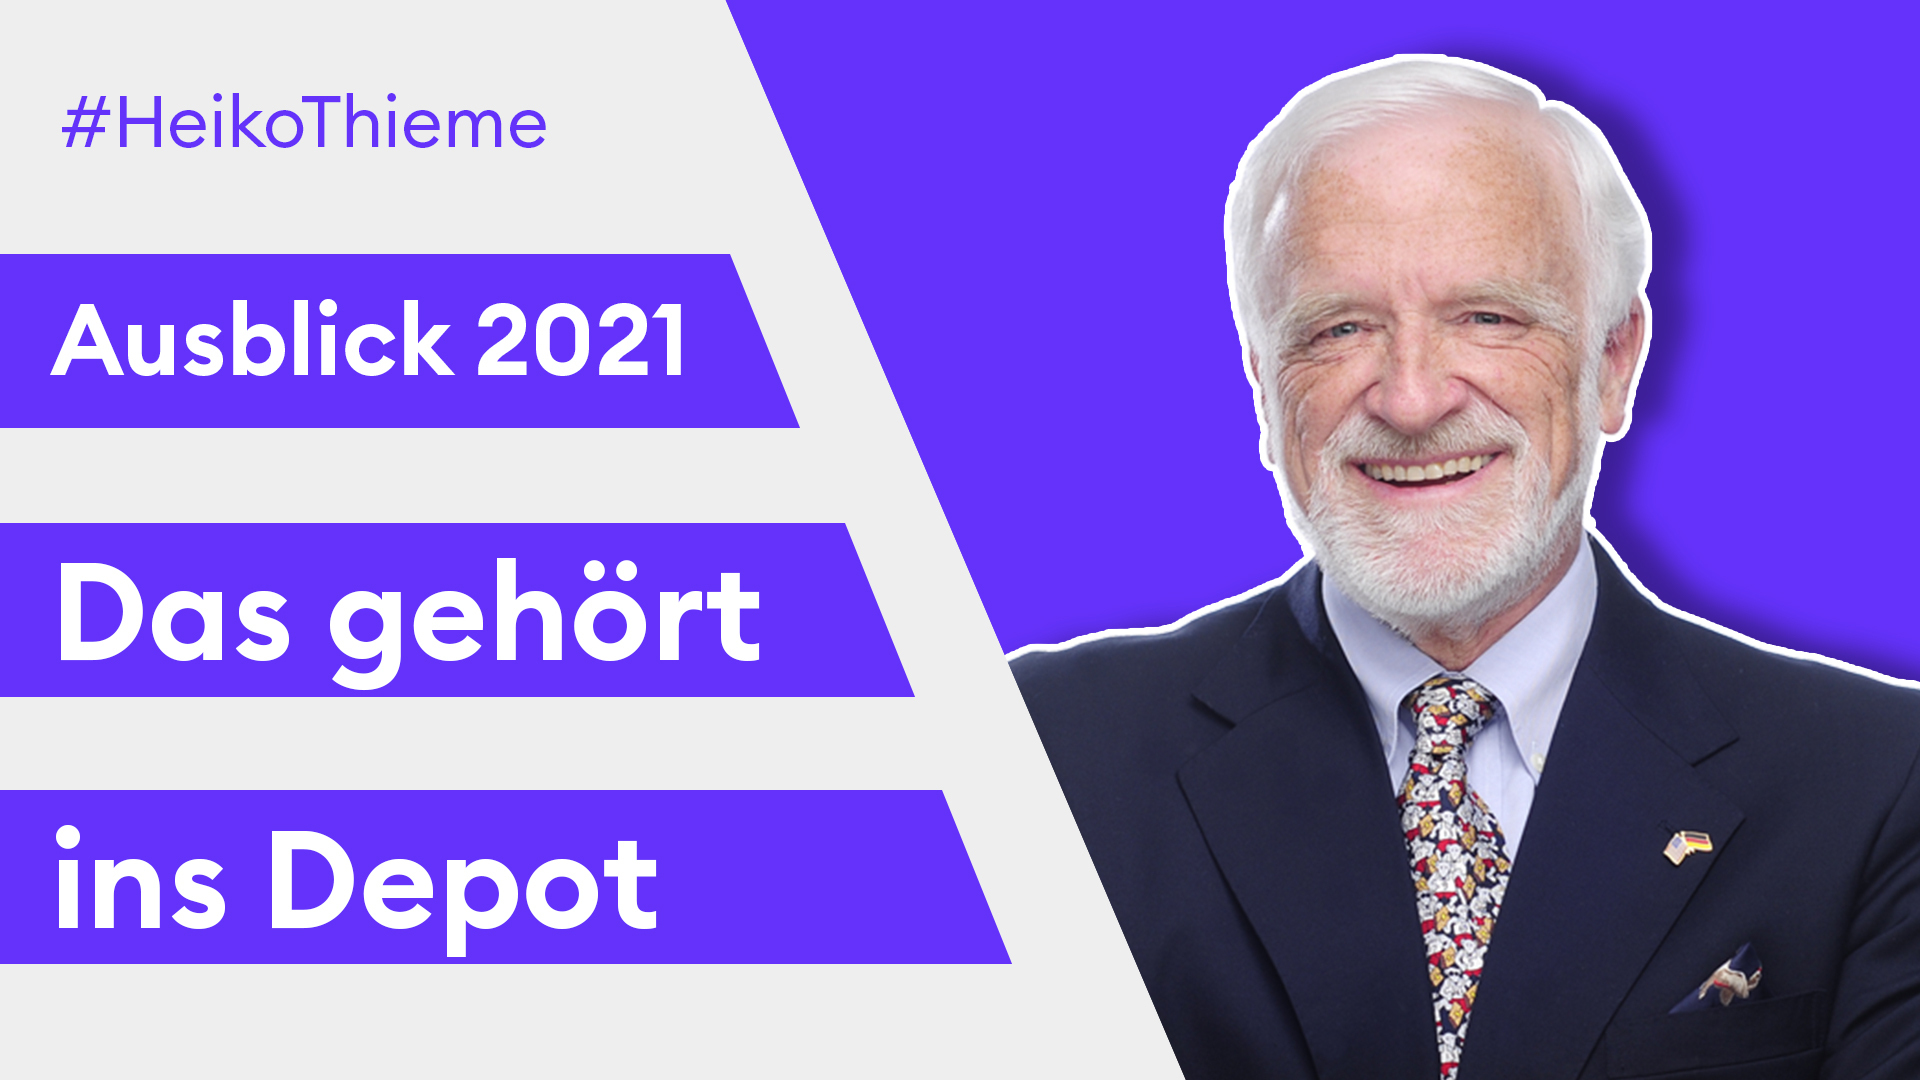 Heiko Thieme Ausblick 2021